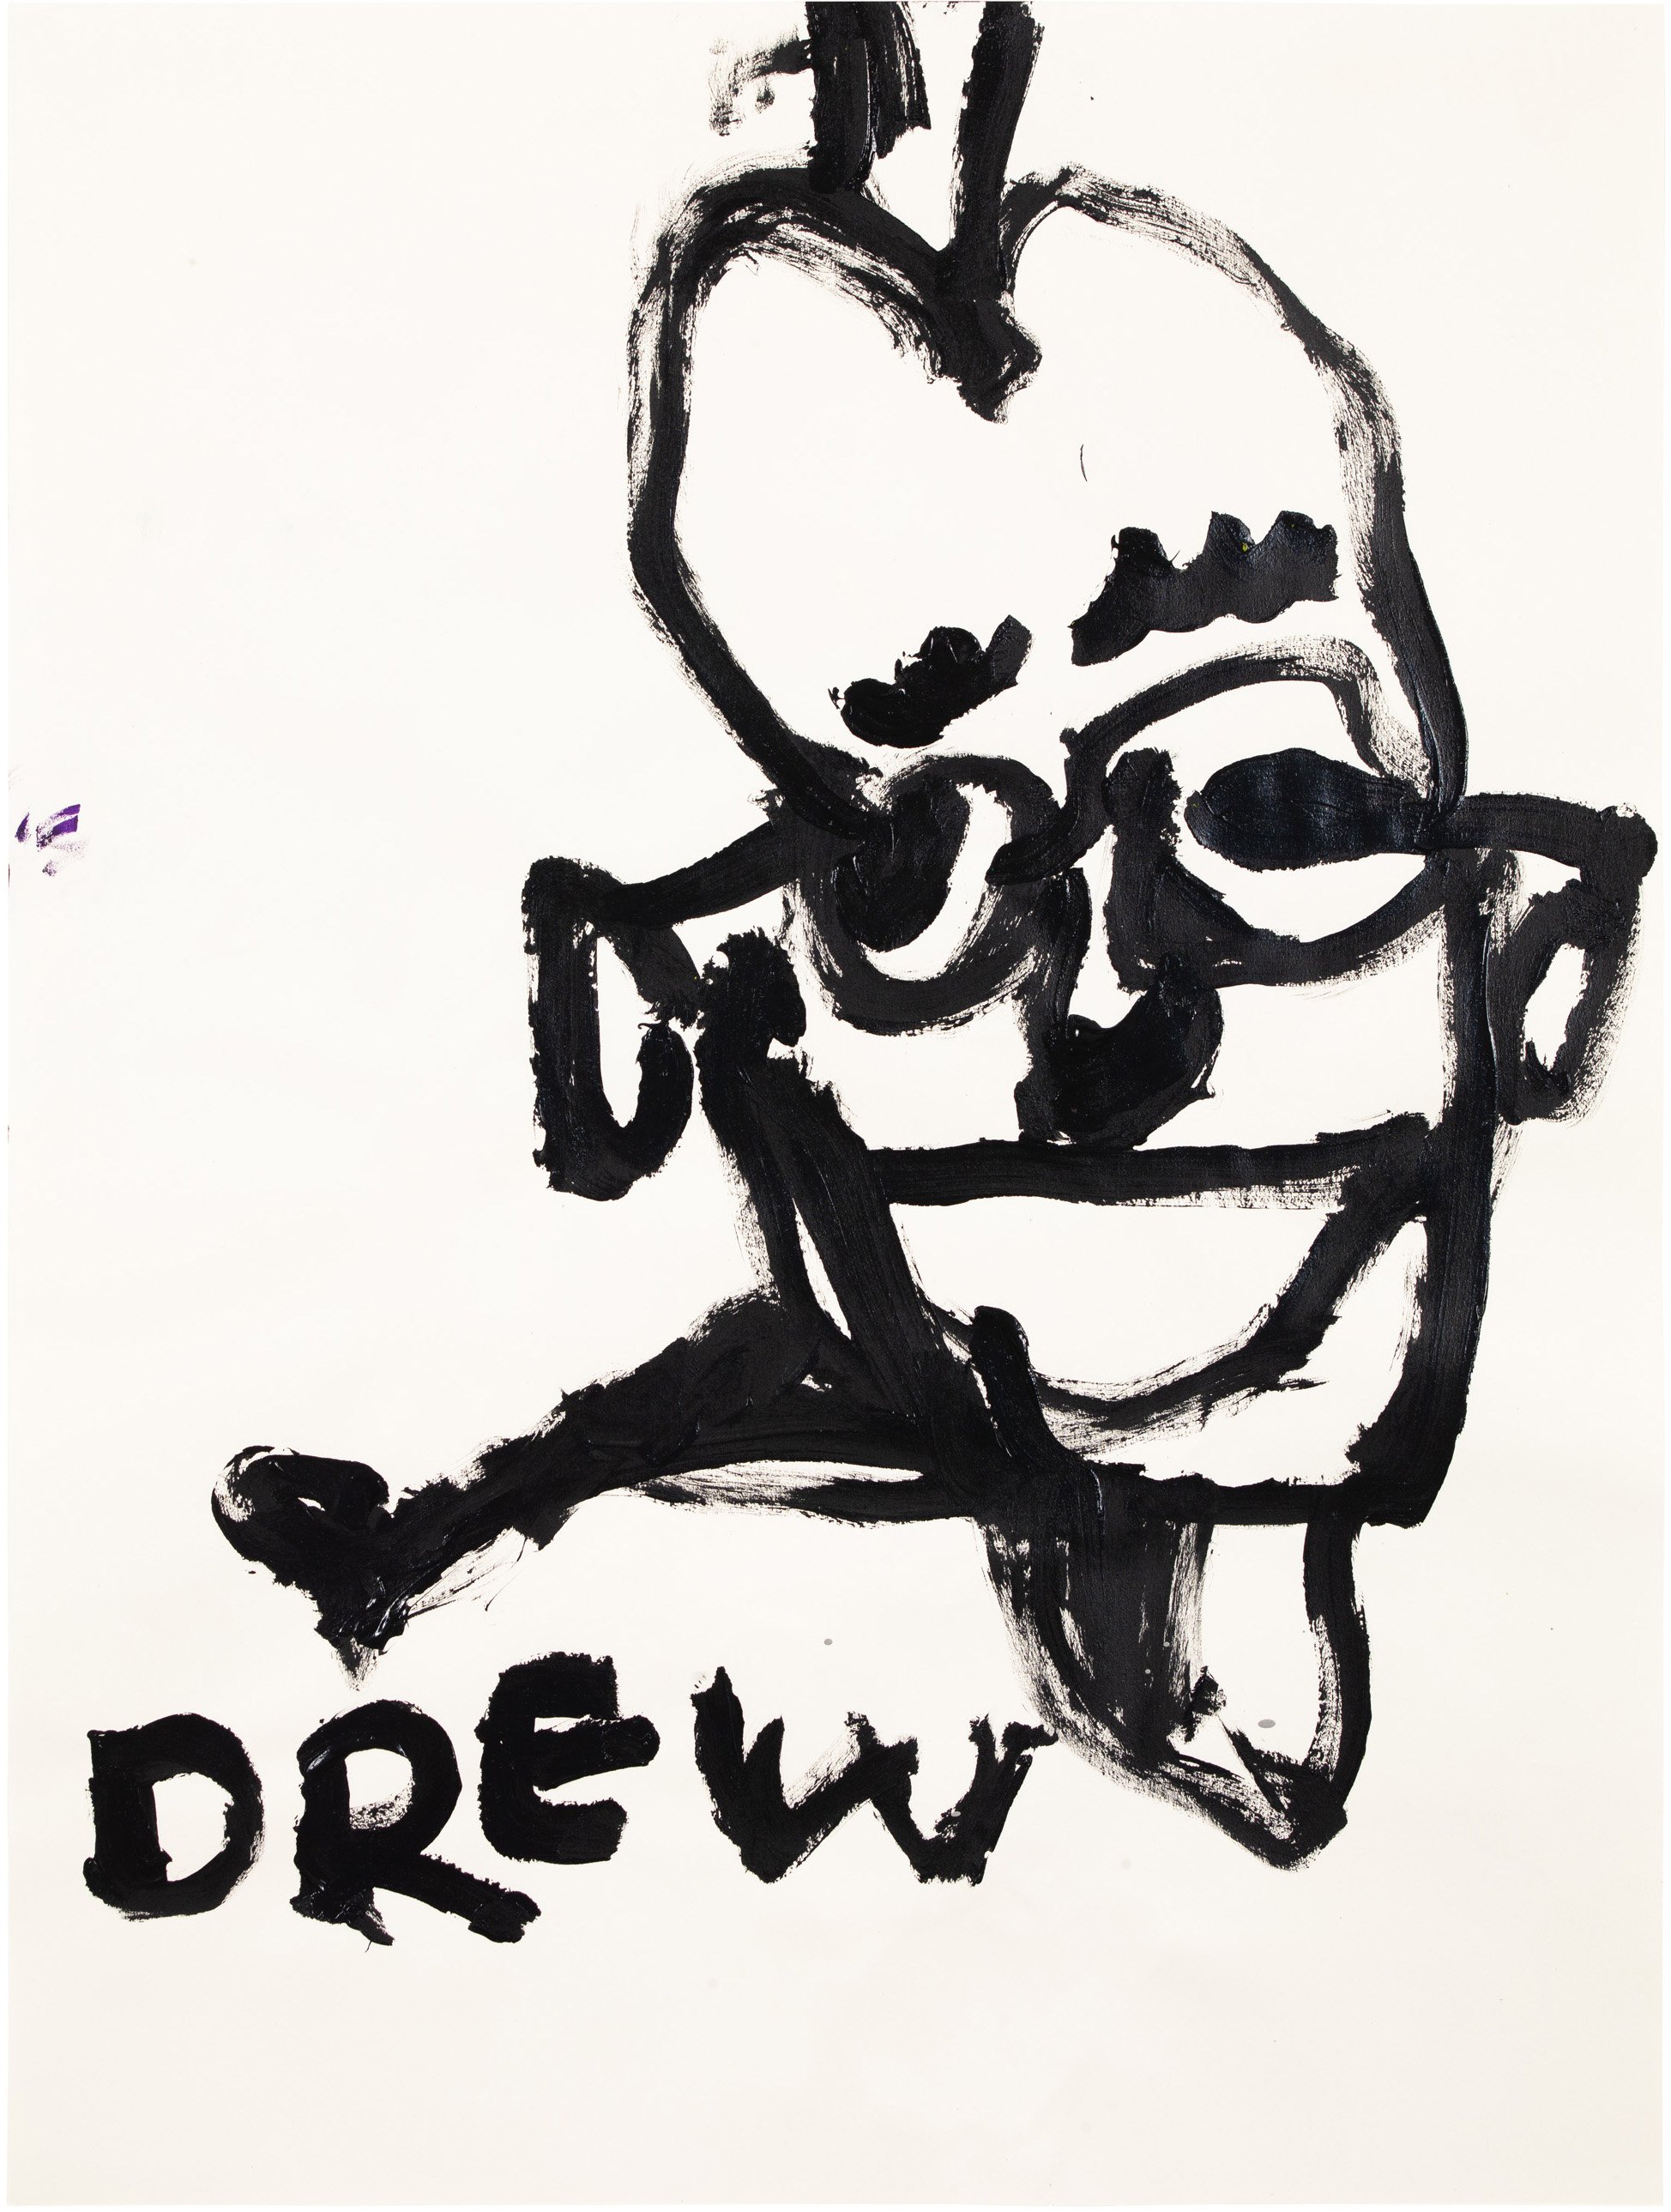  Drew Beattie and Ben Shepard DBBS-DRW-2021-156  2021 acrylic on paper 24 x 18 inches 